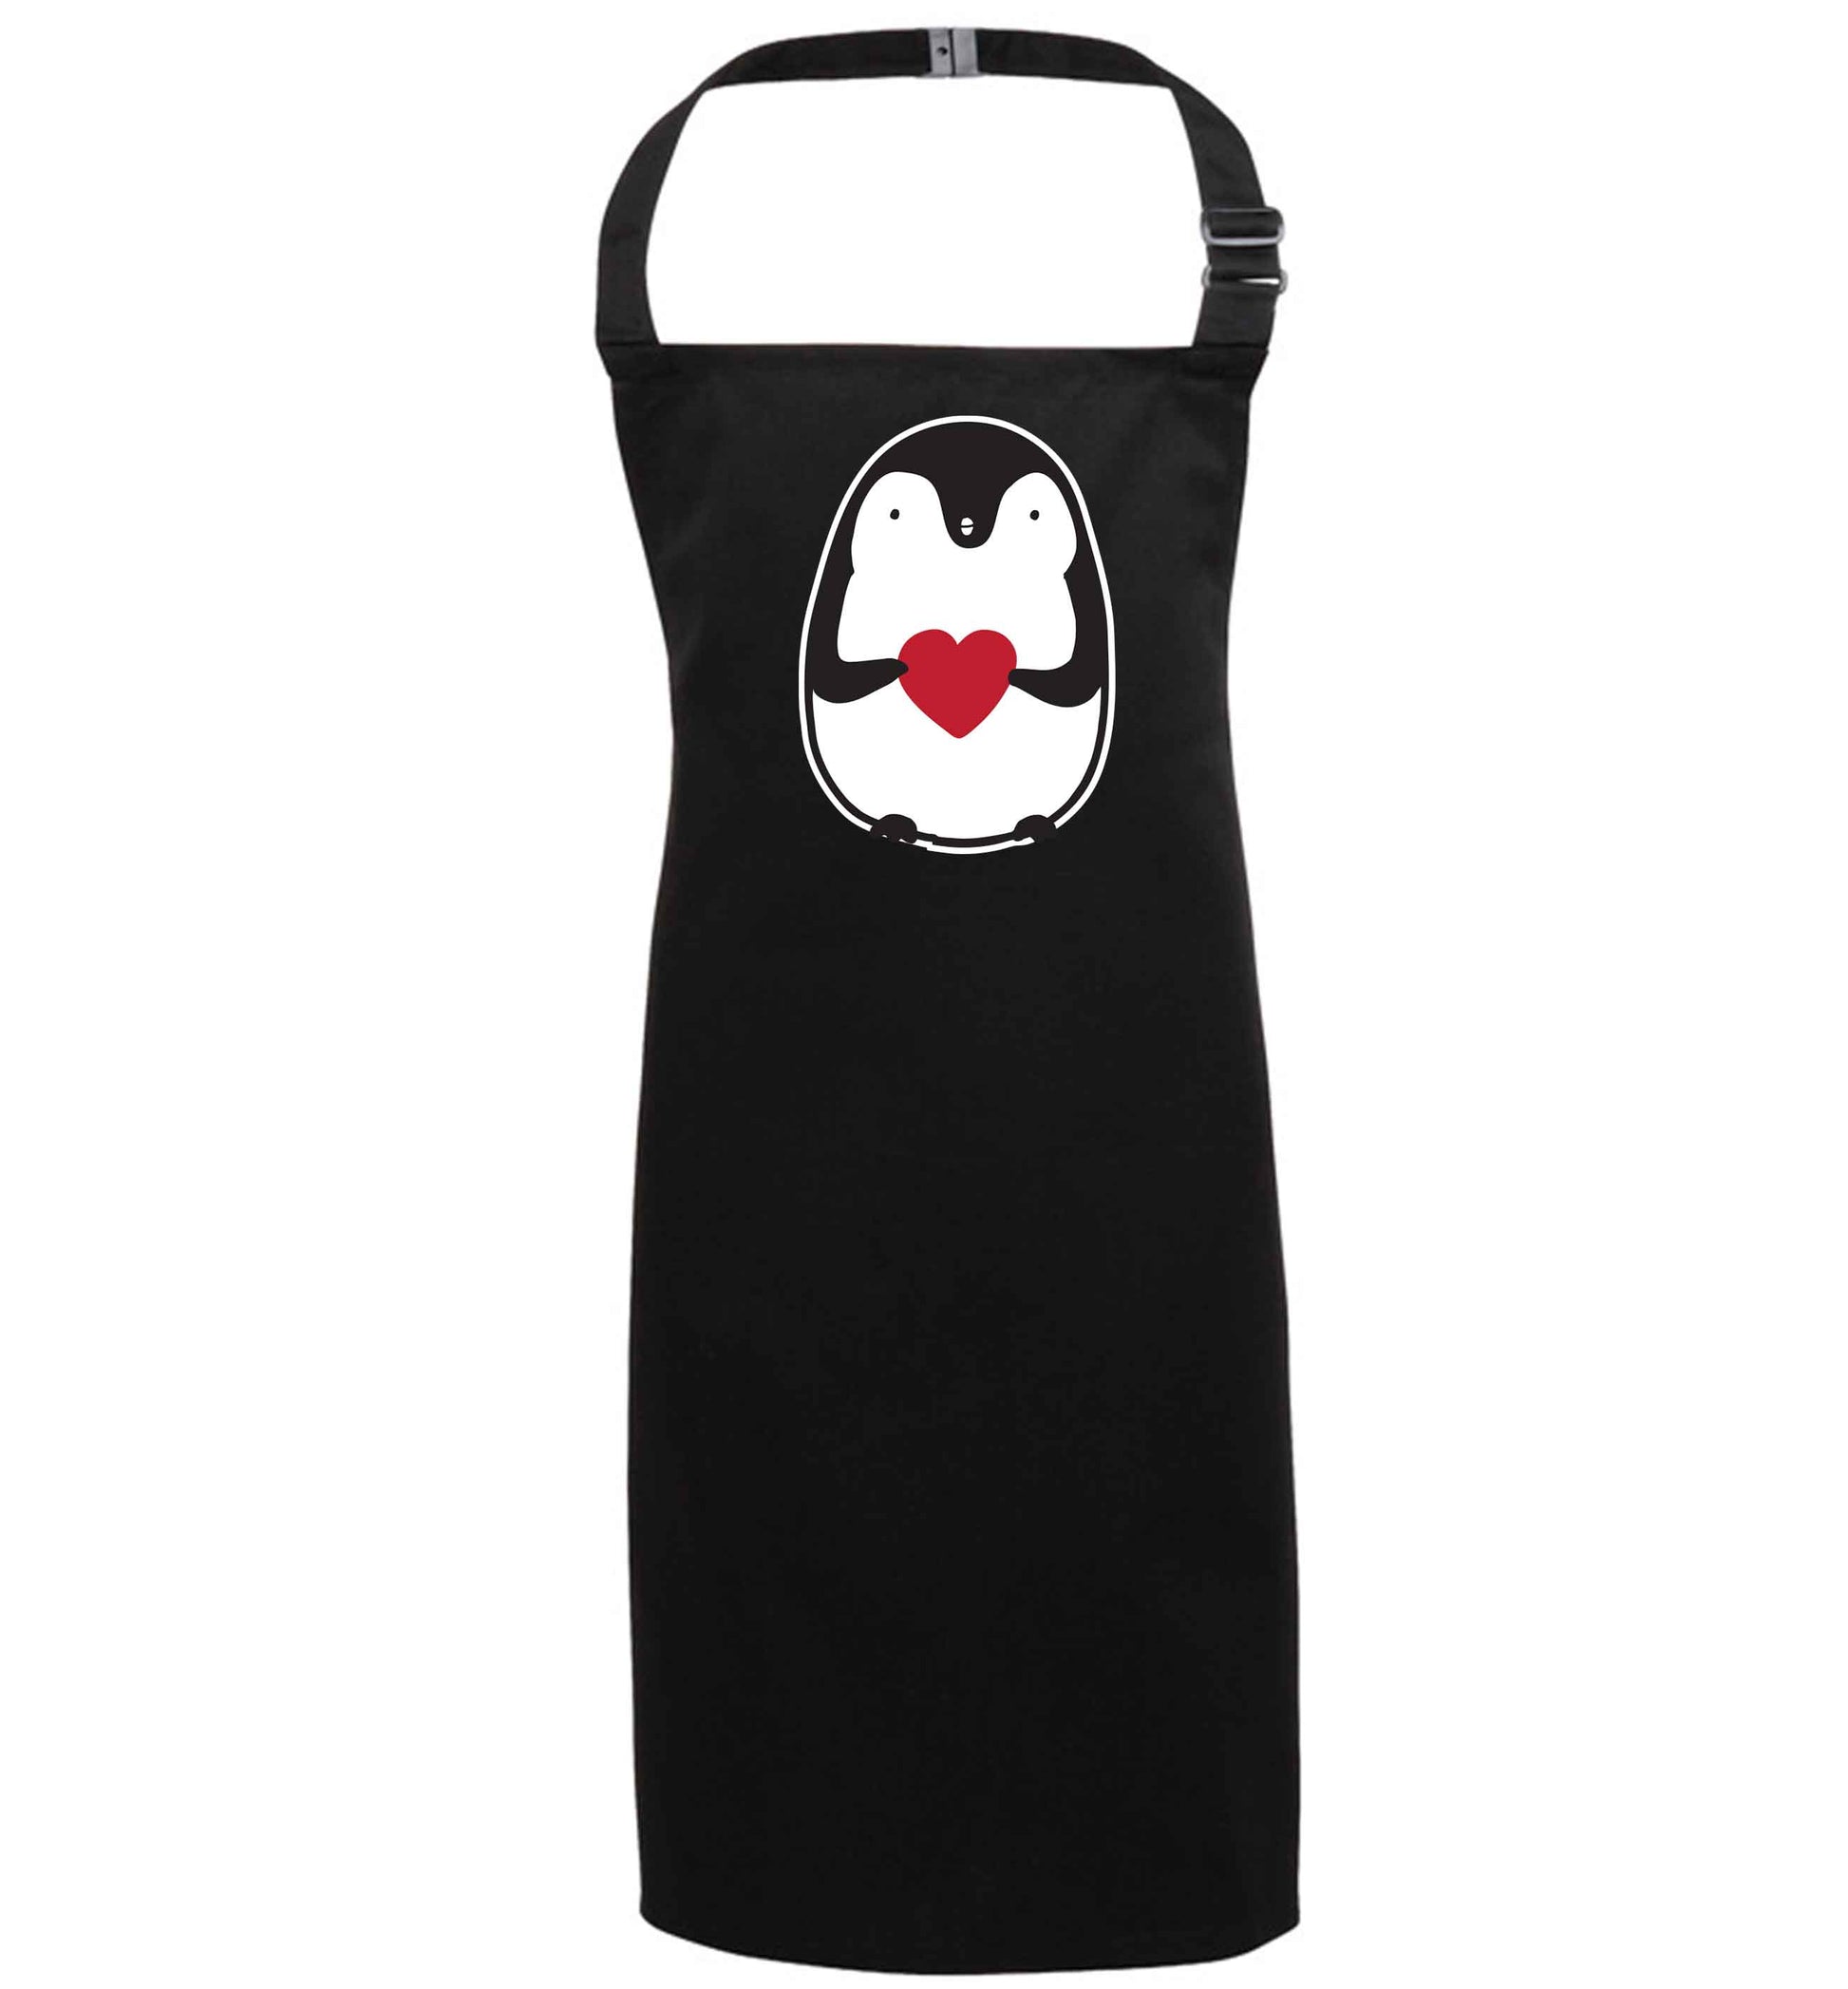 Cute penguin heart black apron 7-10 years